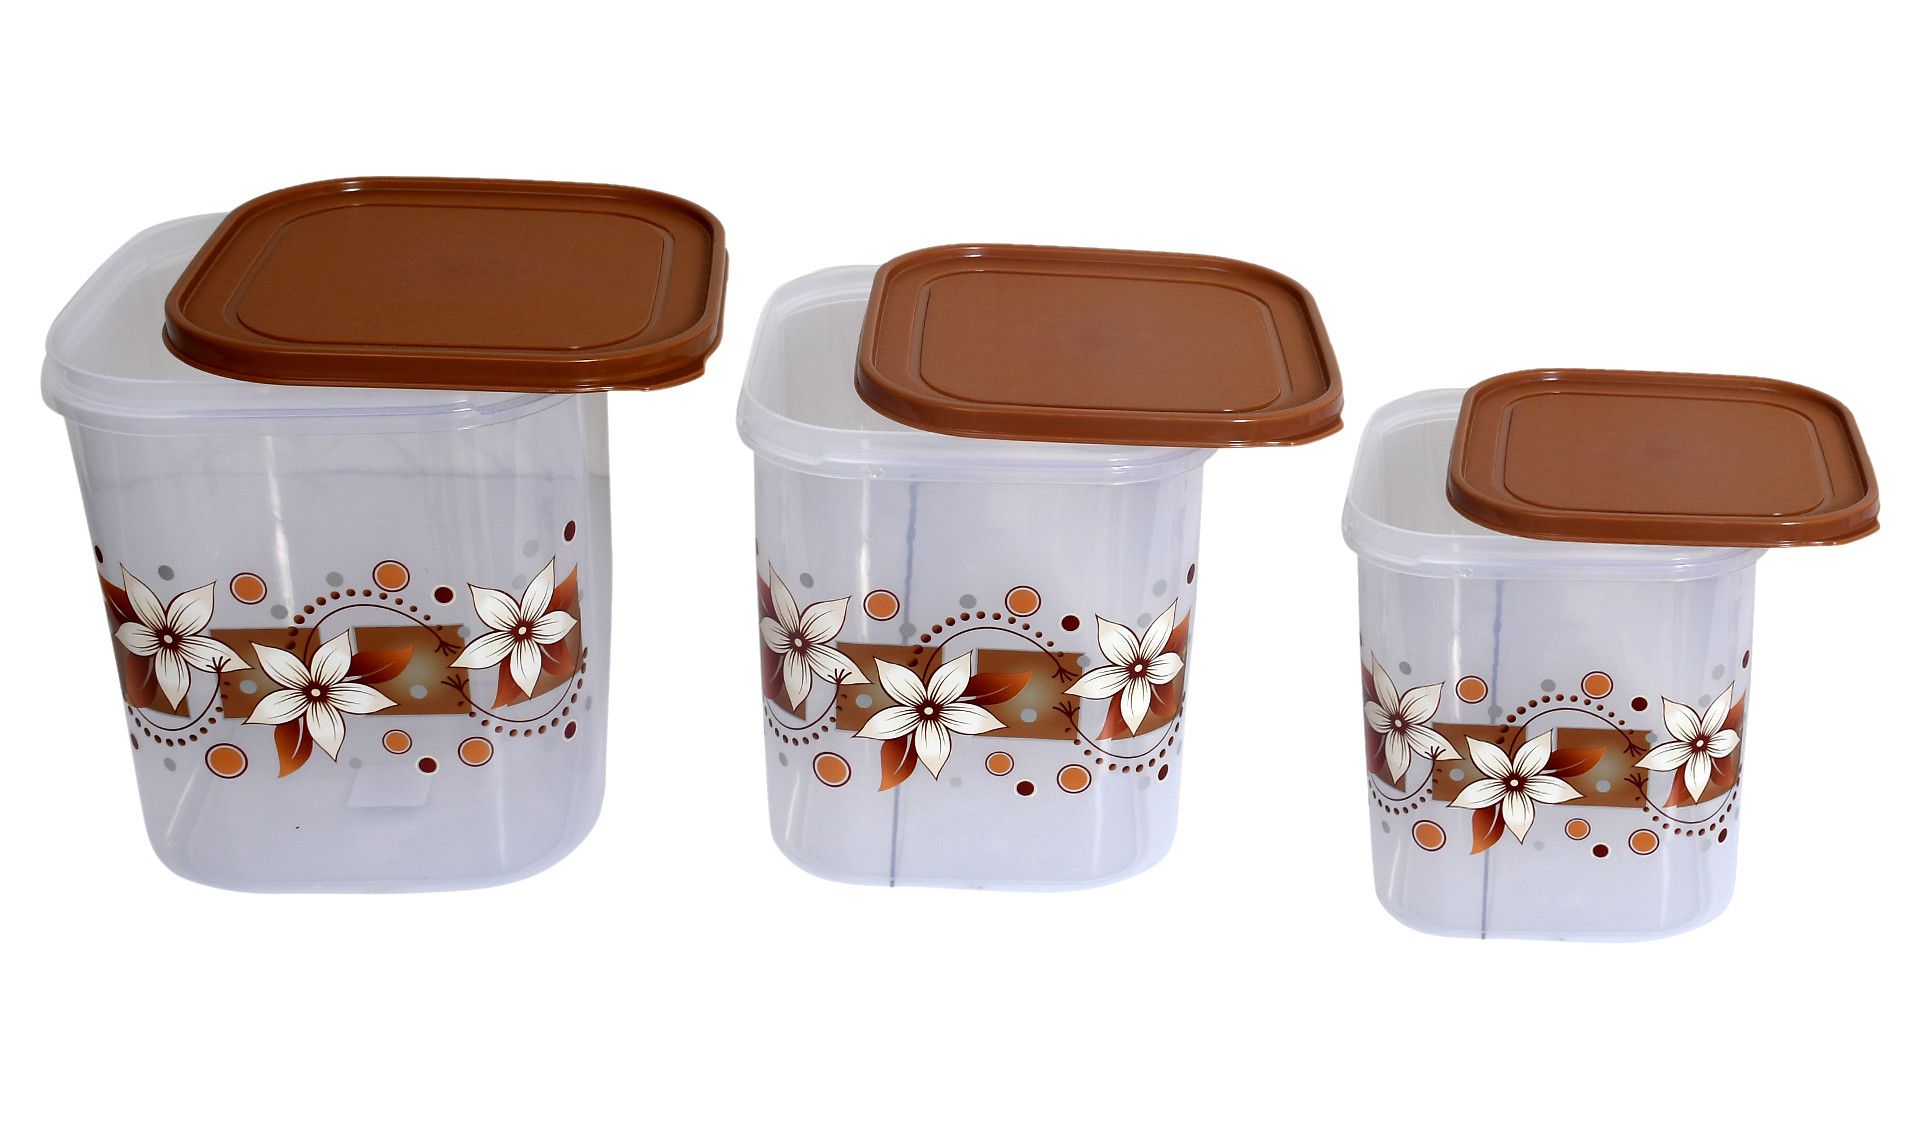 Kuber Industries Plastic Fantasy Kitchen Storage Container Set, 3 Pieces (6 LTR, 8 LTR, 11 LTR) Brown